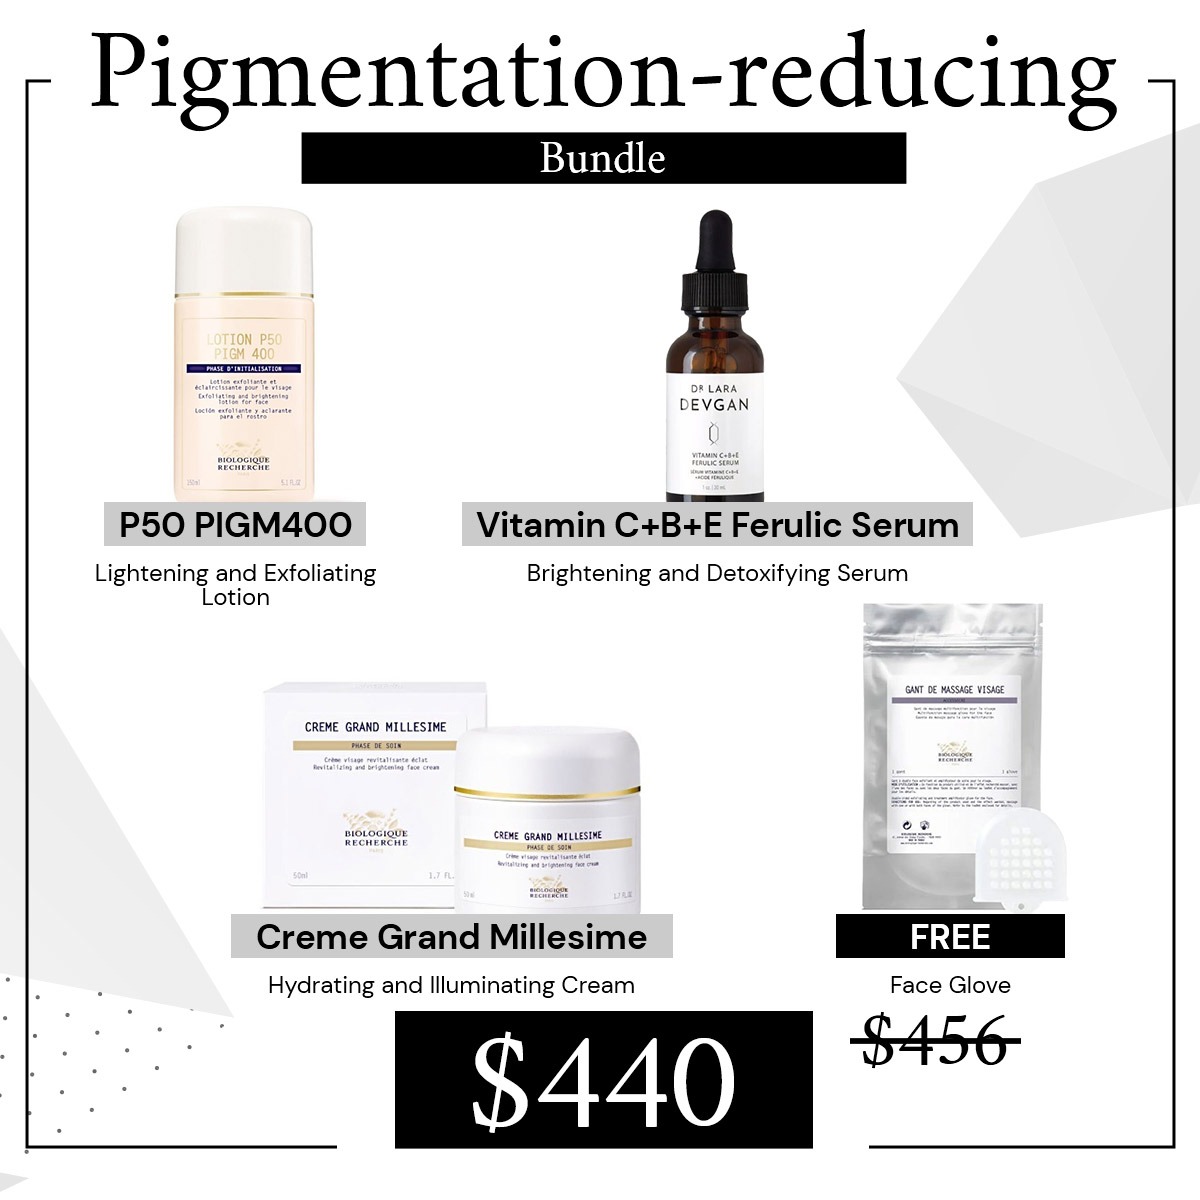 Pigmentation-reducing skincare bundle